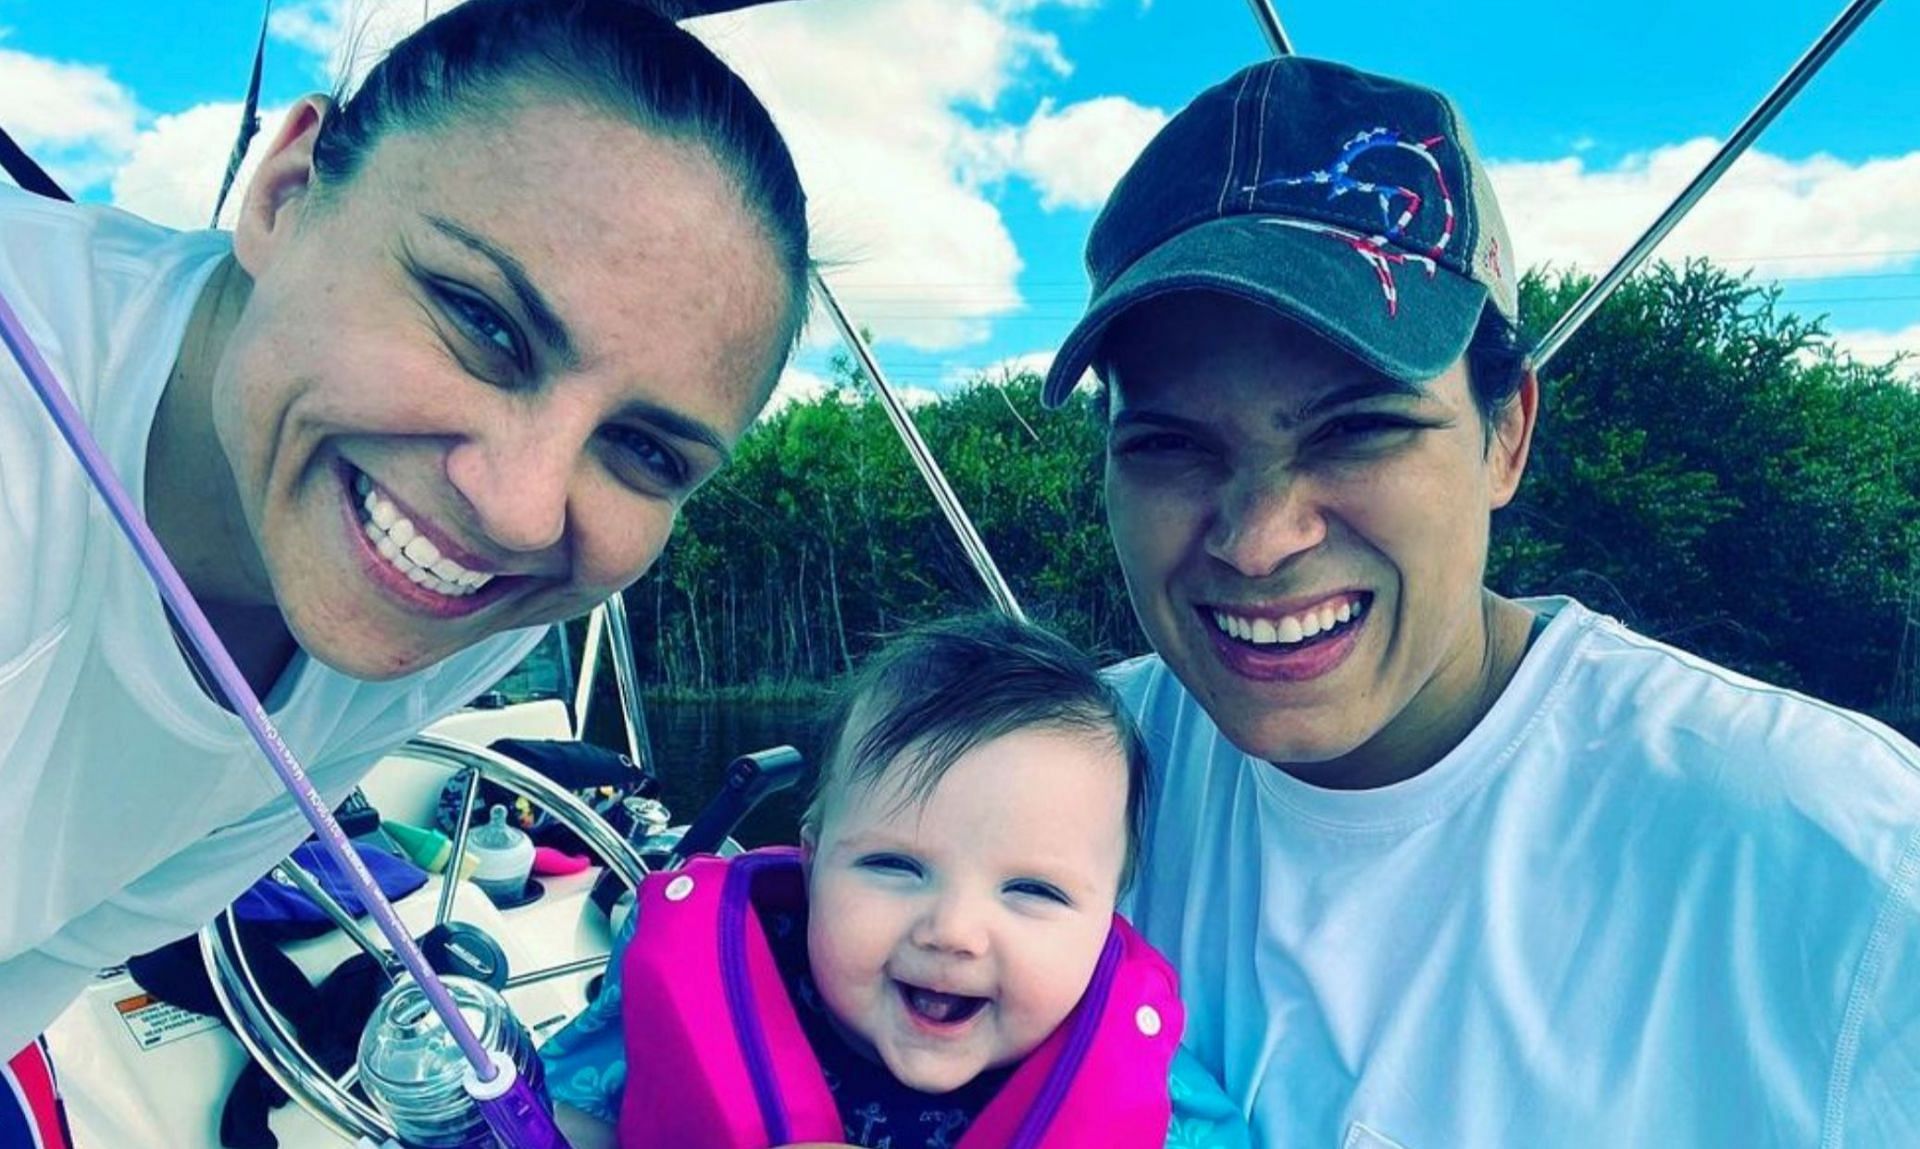 Amanda Nunes and her wife Nina are now proud parents